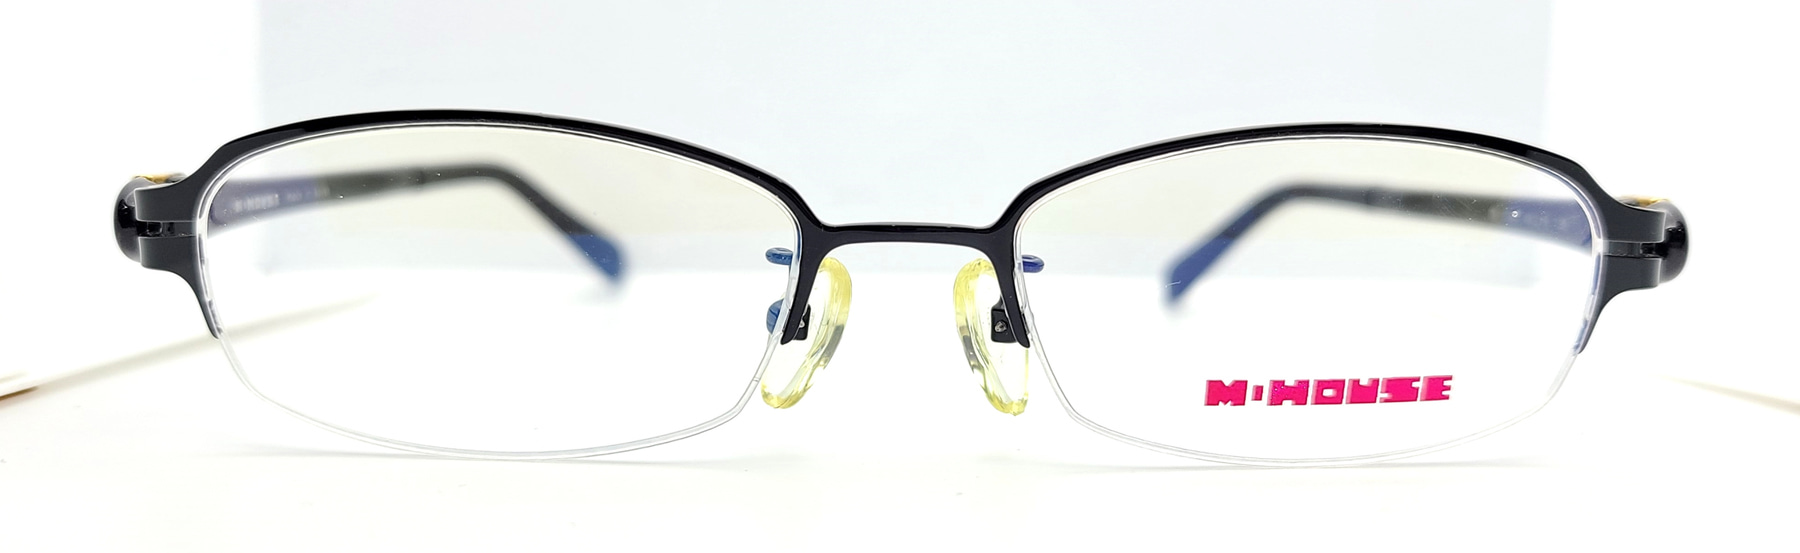 MINIHOUSE M-1084, Korean glasses, sunglasses, eyeglasses, glasses